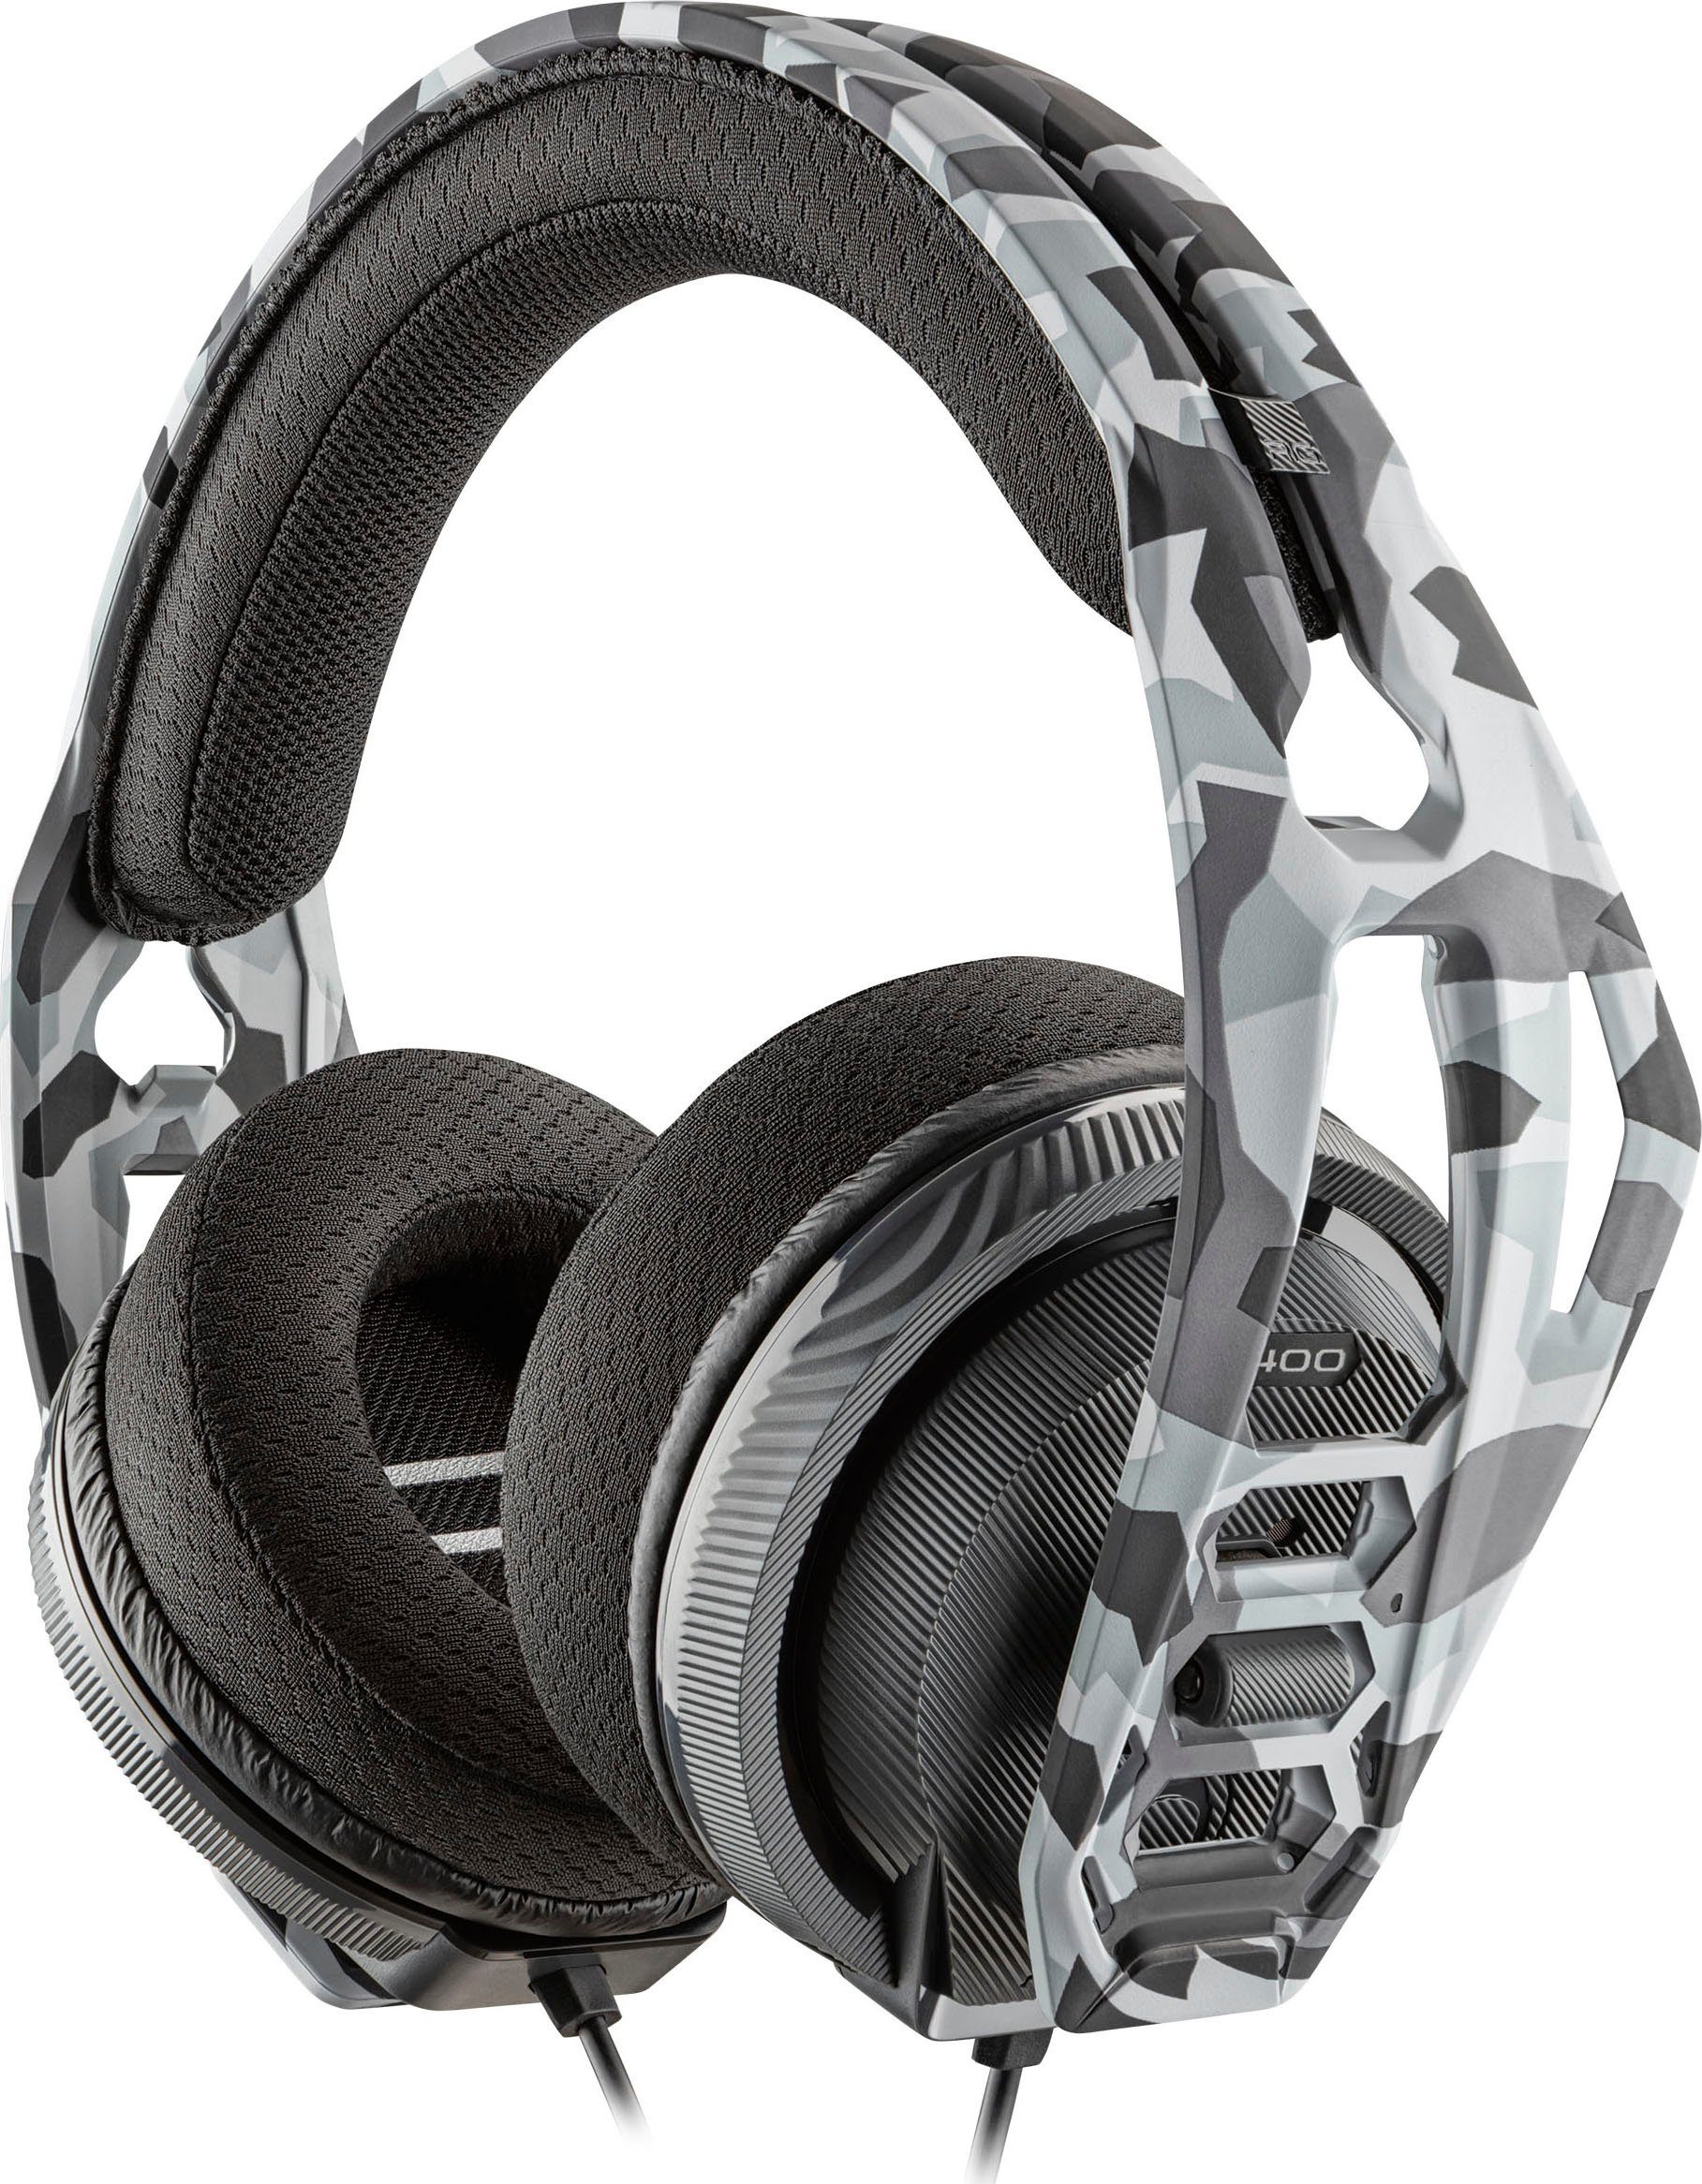 Camo-schwarz, 400HS Ear, 3,5 Stereo, Gaming-Headset, abnehmbar, Klinke Nacon RIG Headset (Mikrofon Mac, kabelgebunden, nacon PC, Gaming- PS4-Lizenz) Over mm